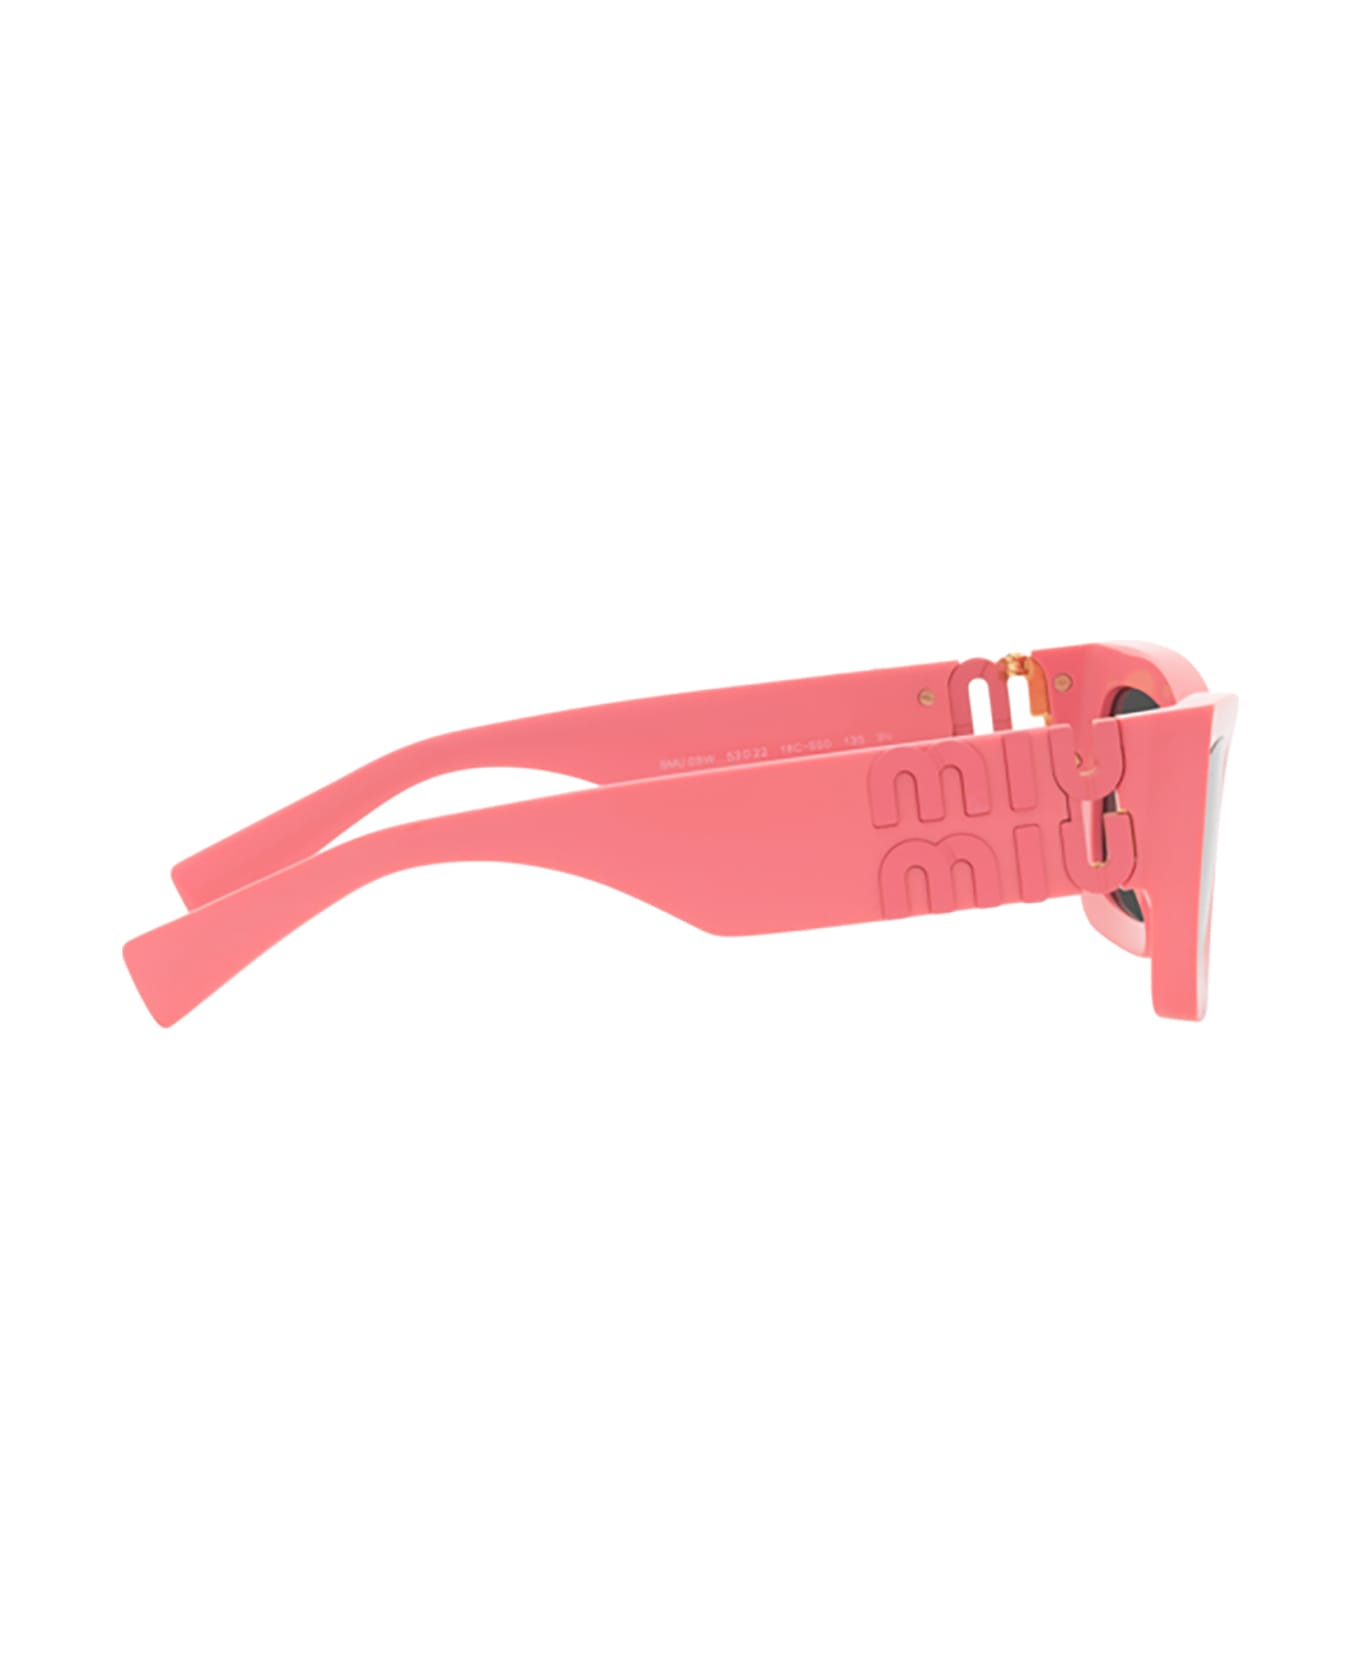 Miu Miu Eyewear Mu 09ws Dark Pink Sunglasses - Dark Pink サングラス